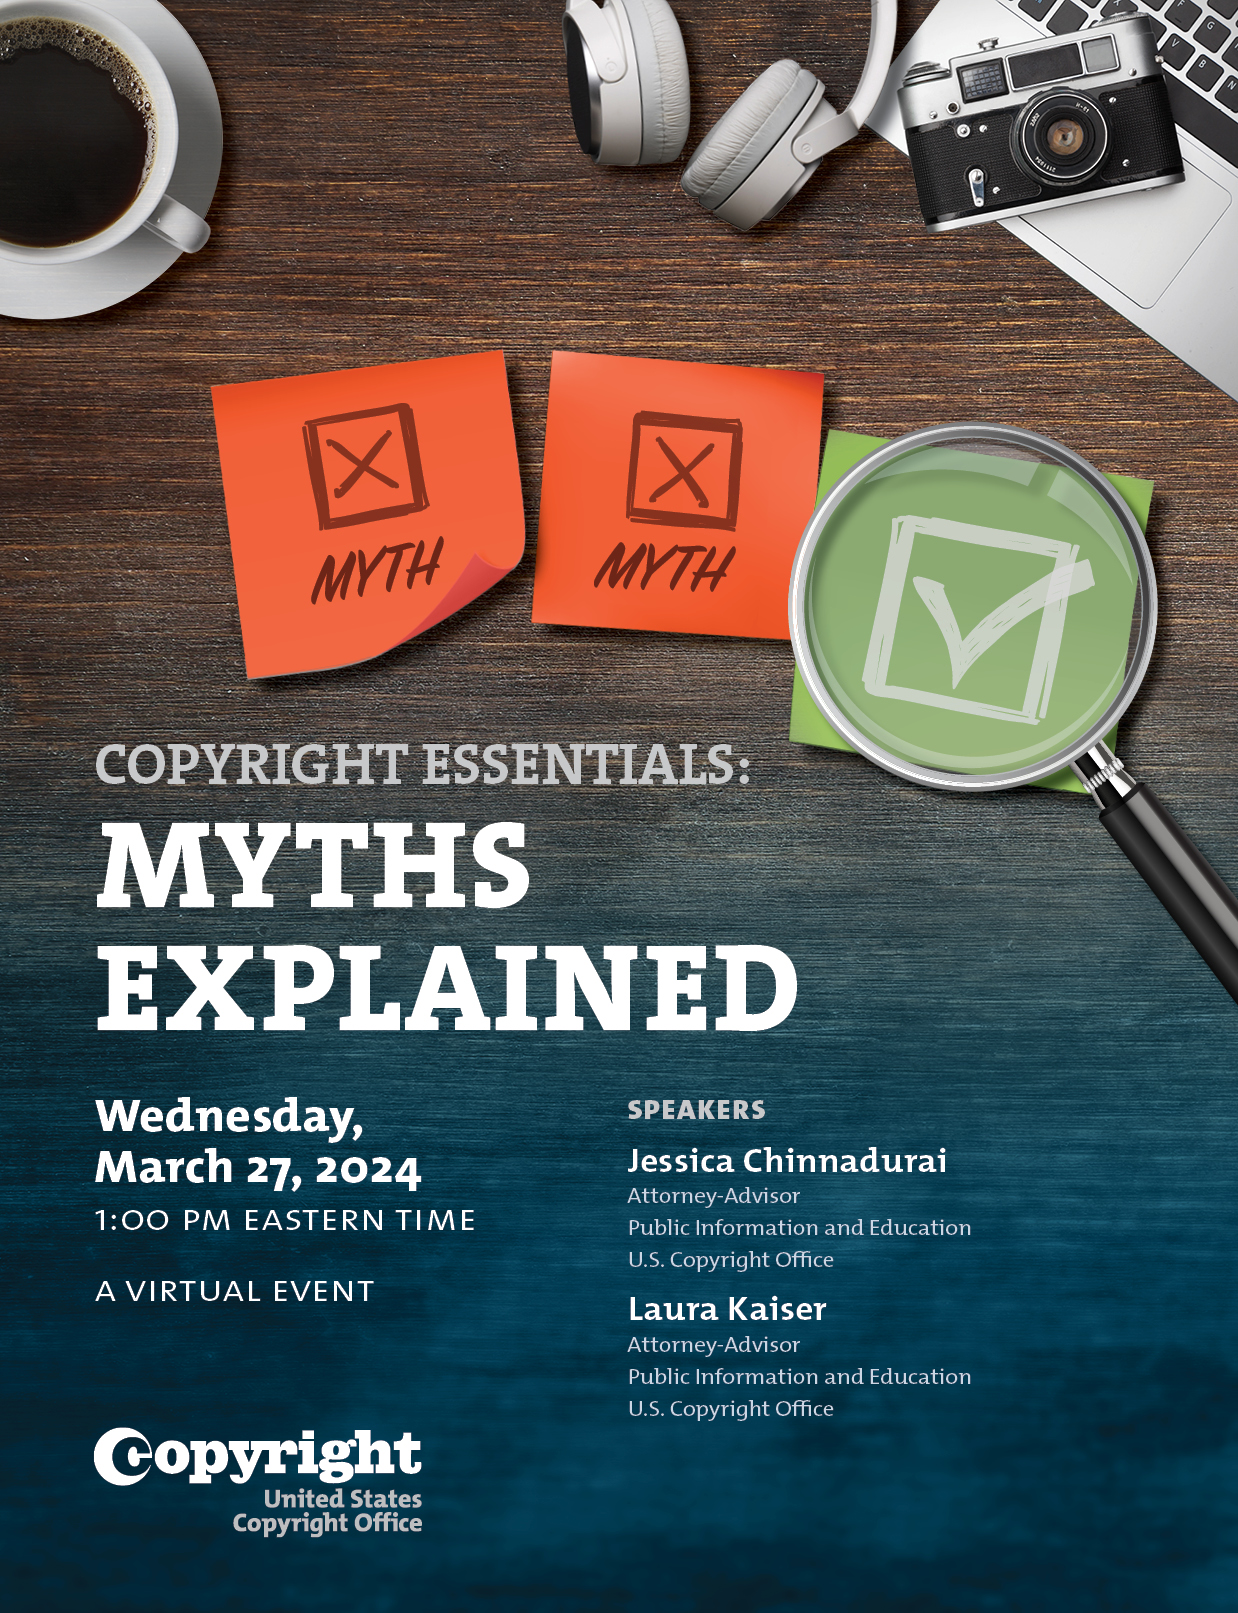 Copyright Essentials: Myths Explained Flyer